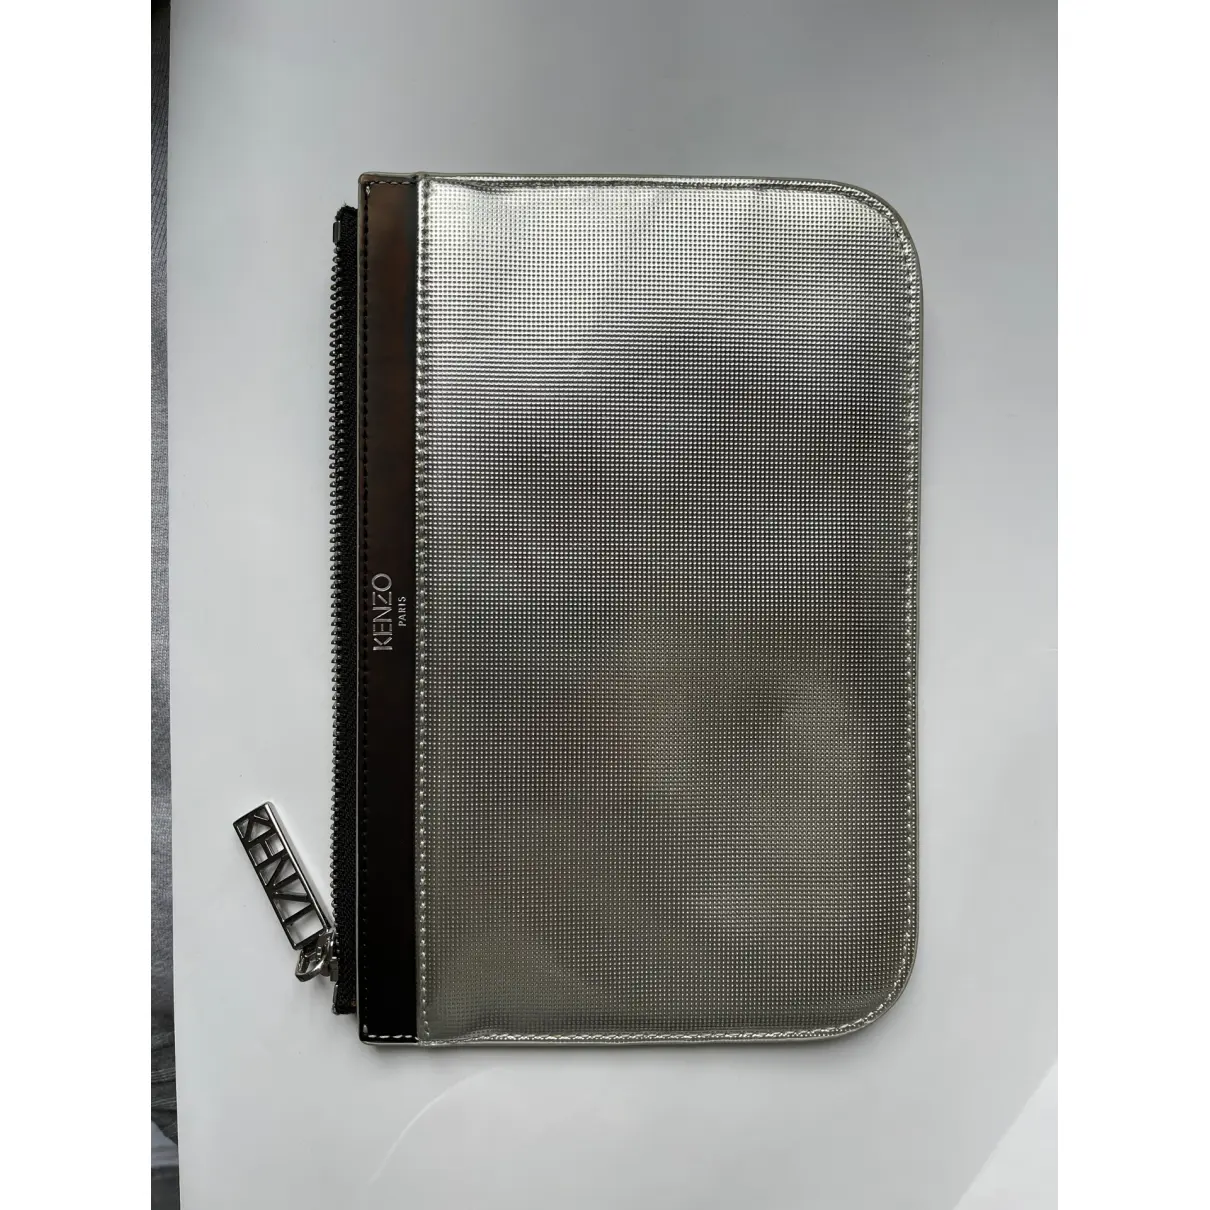 Buy Kenzo Leather clutch bag online